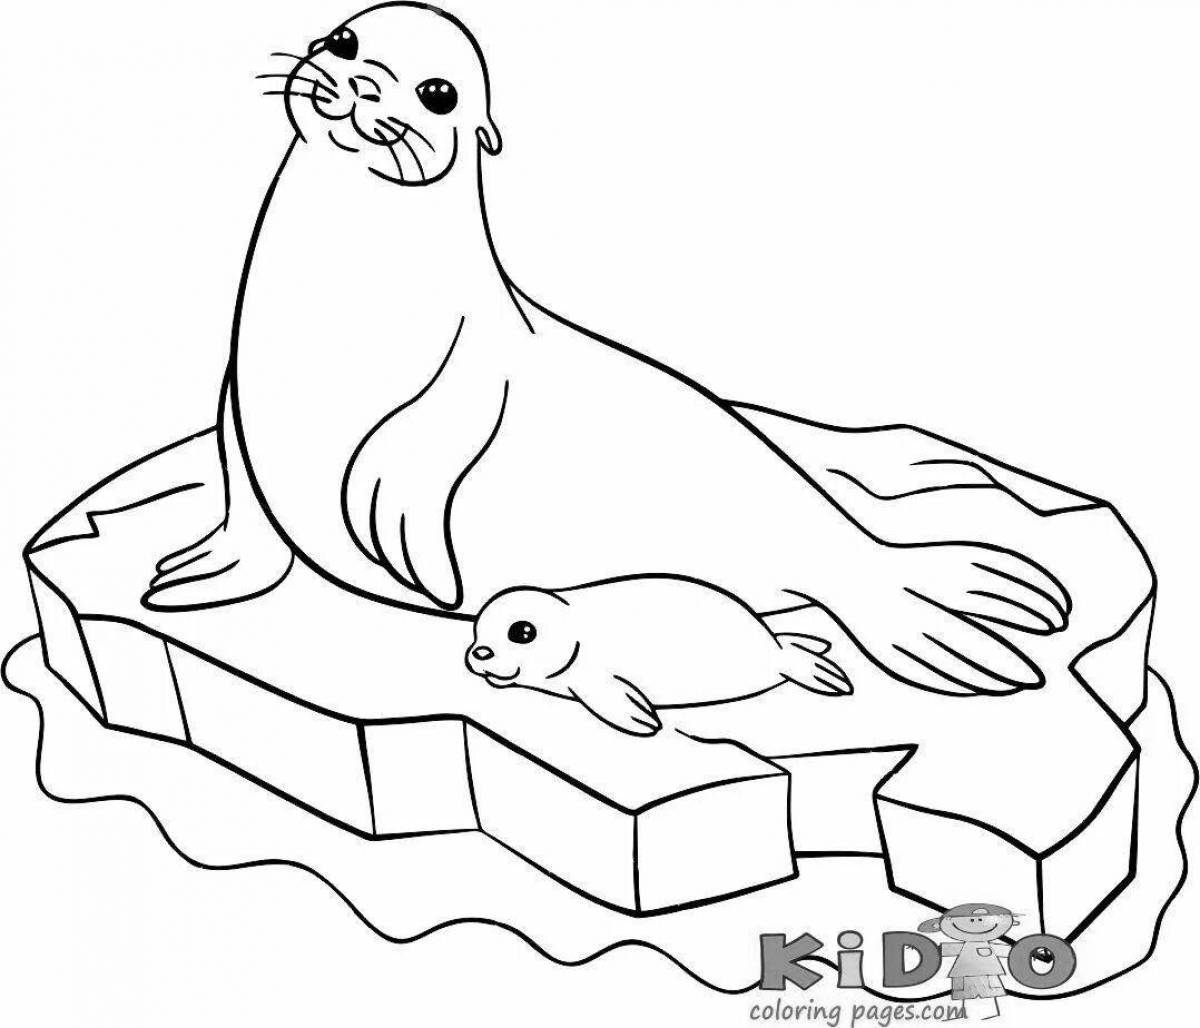 Exquisite harbor seal coloring